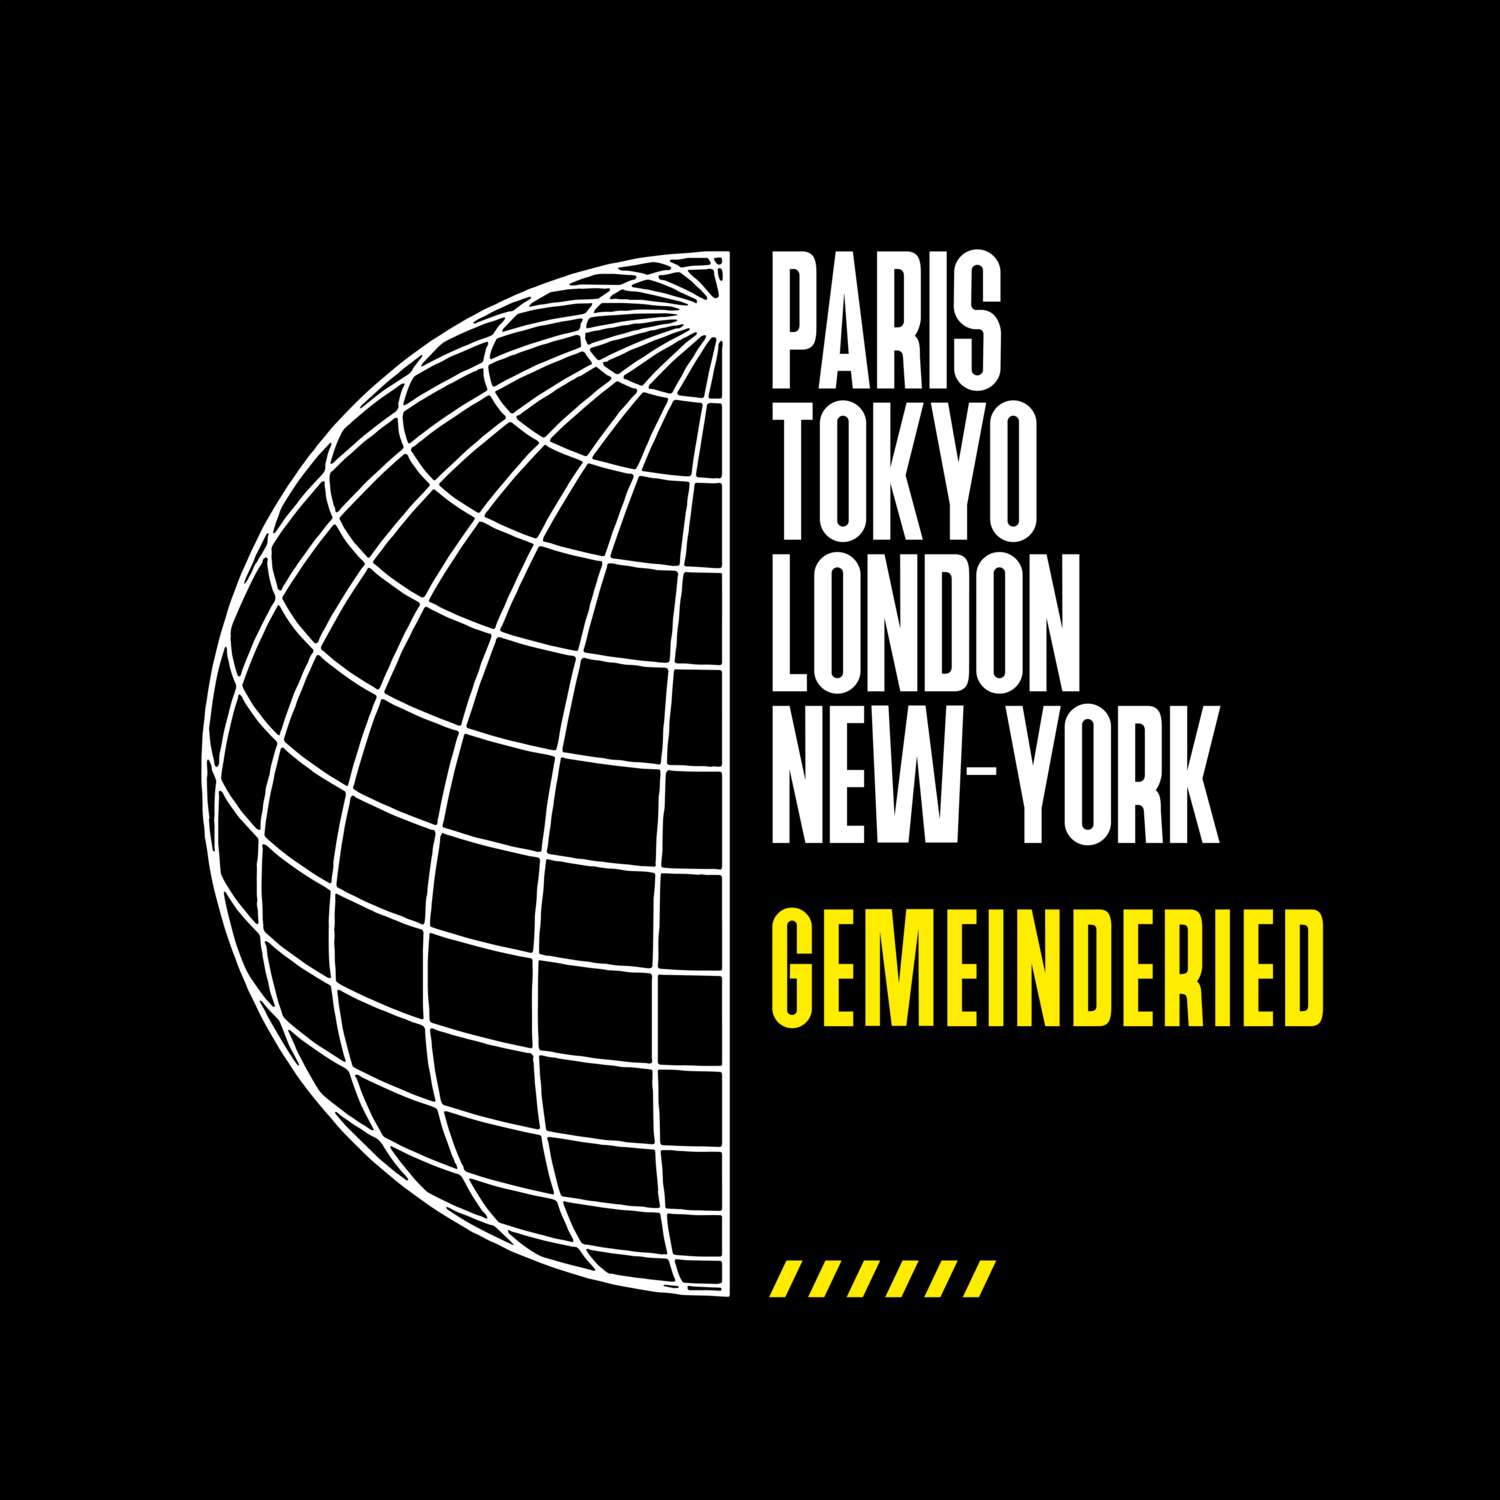 Gemeinderied T-Shirt »Paris Tokyo London«